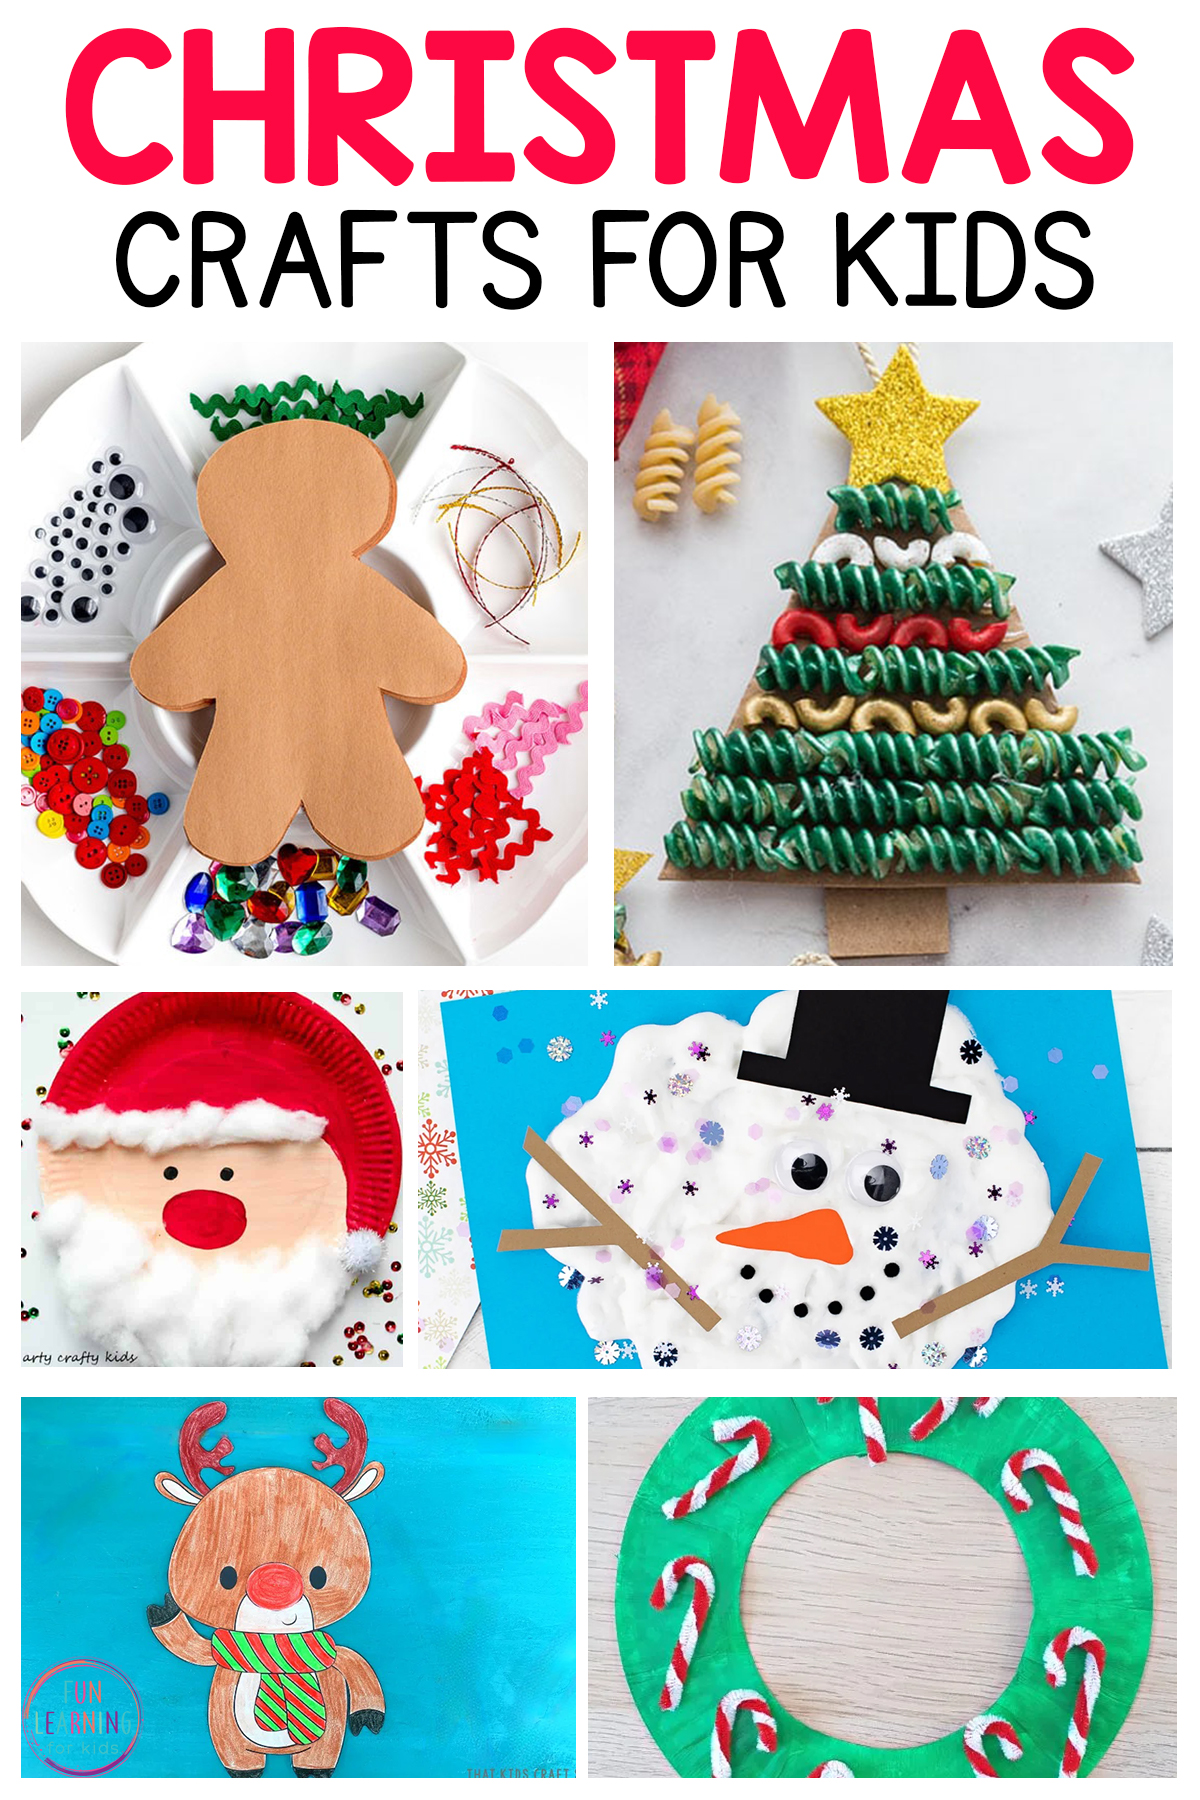 Craft Stick Snowman Ornament - Arty Crafty Kids